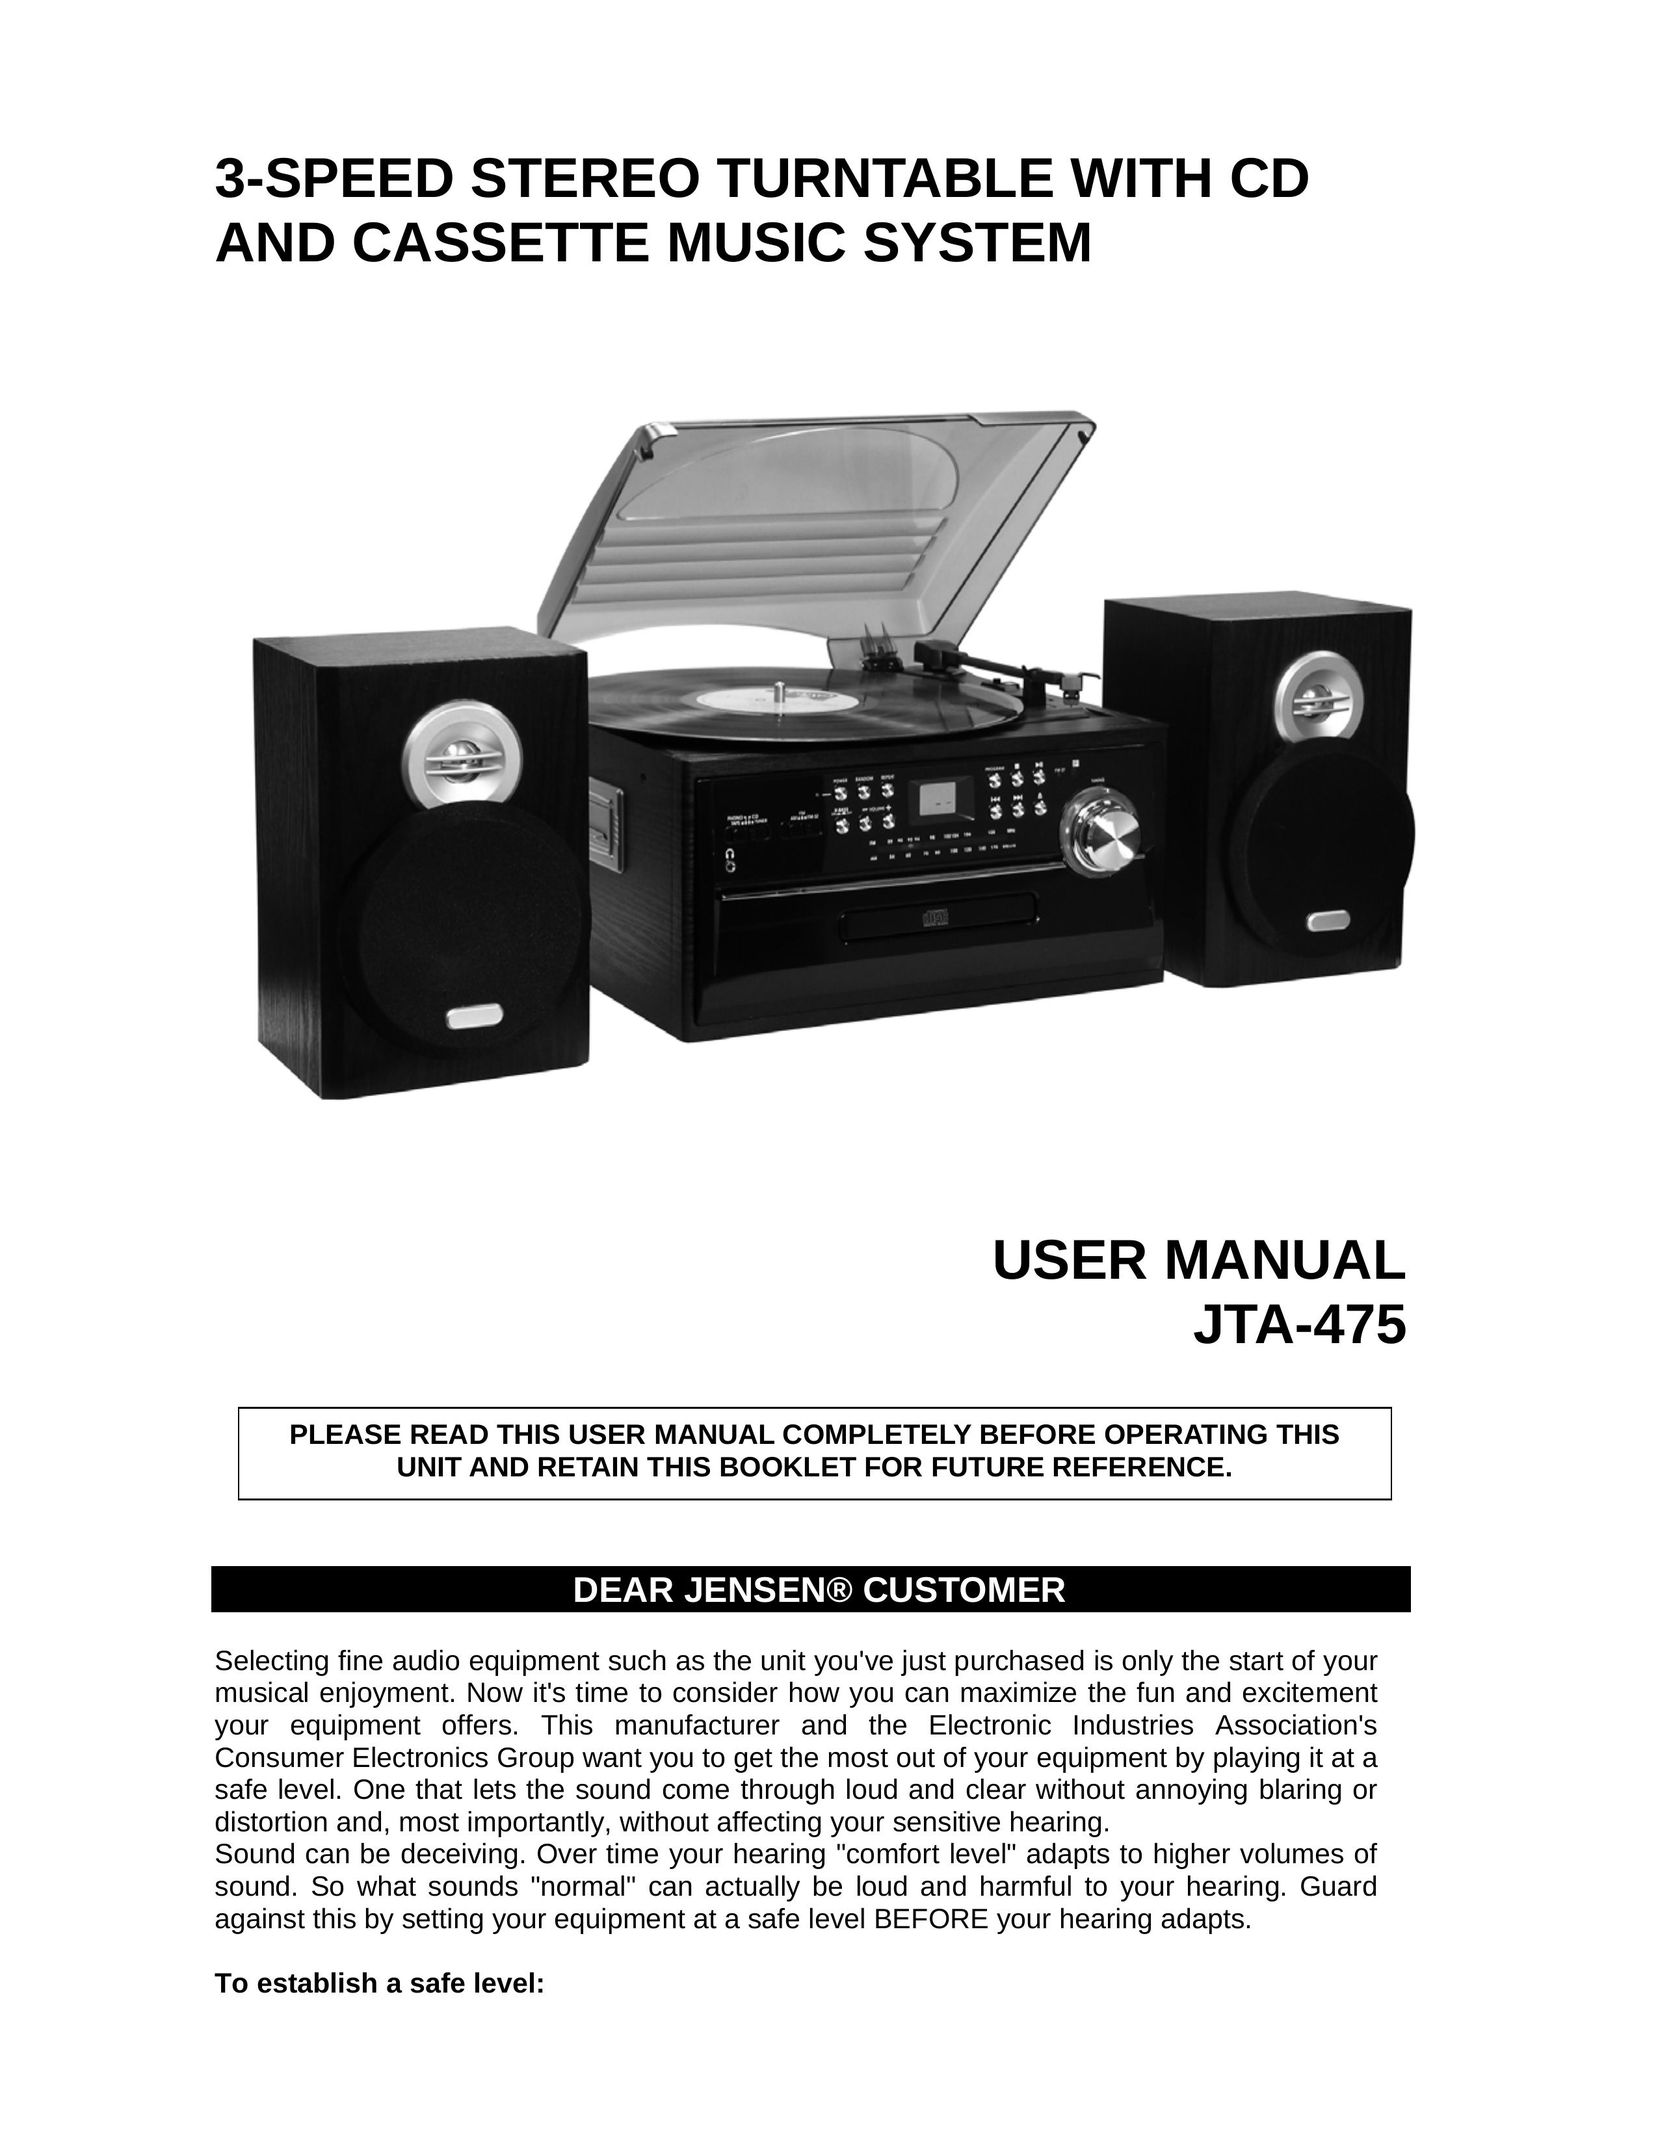 Jensen JTA-475 Turntable User Manual